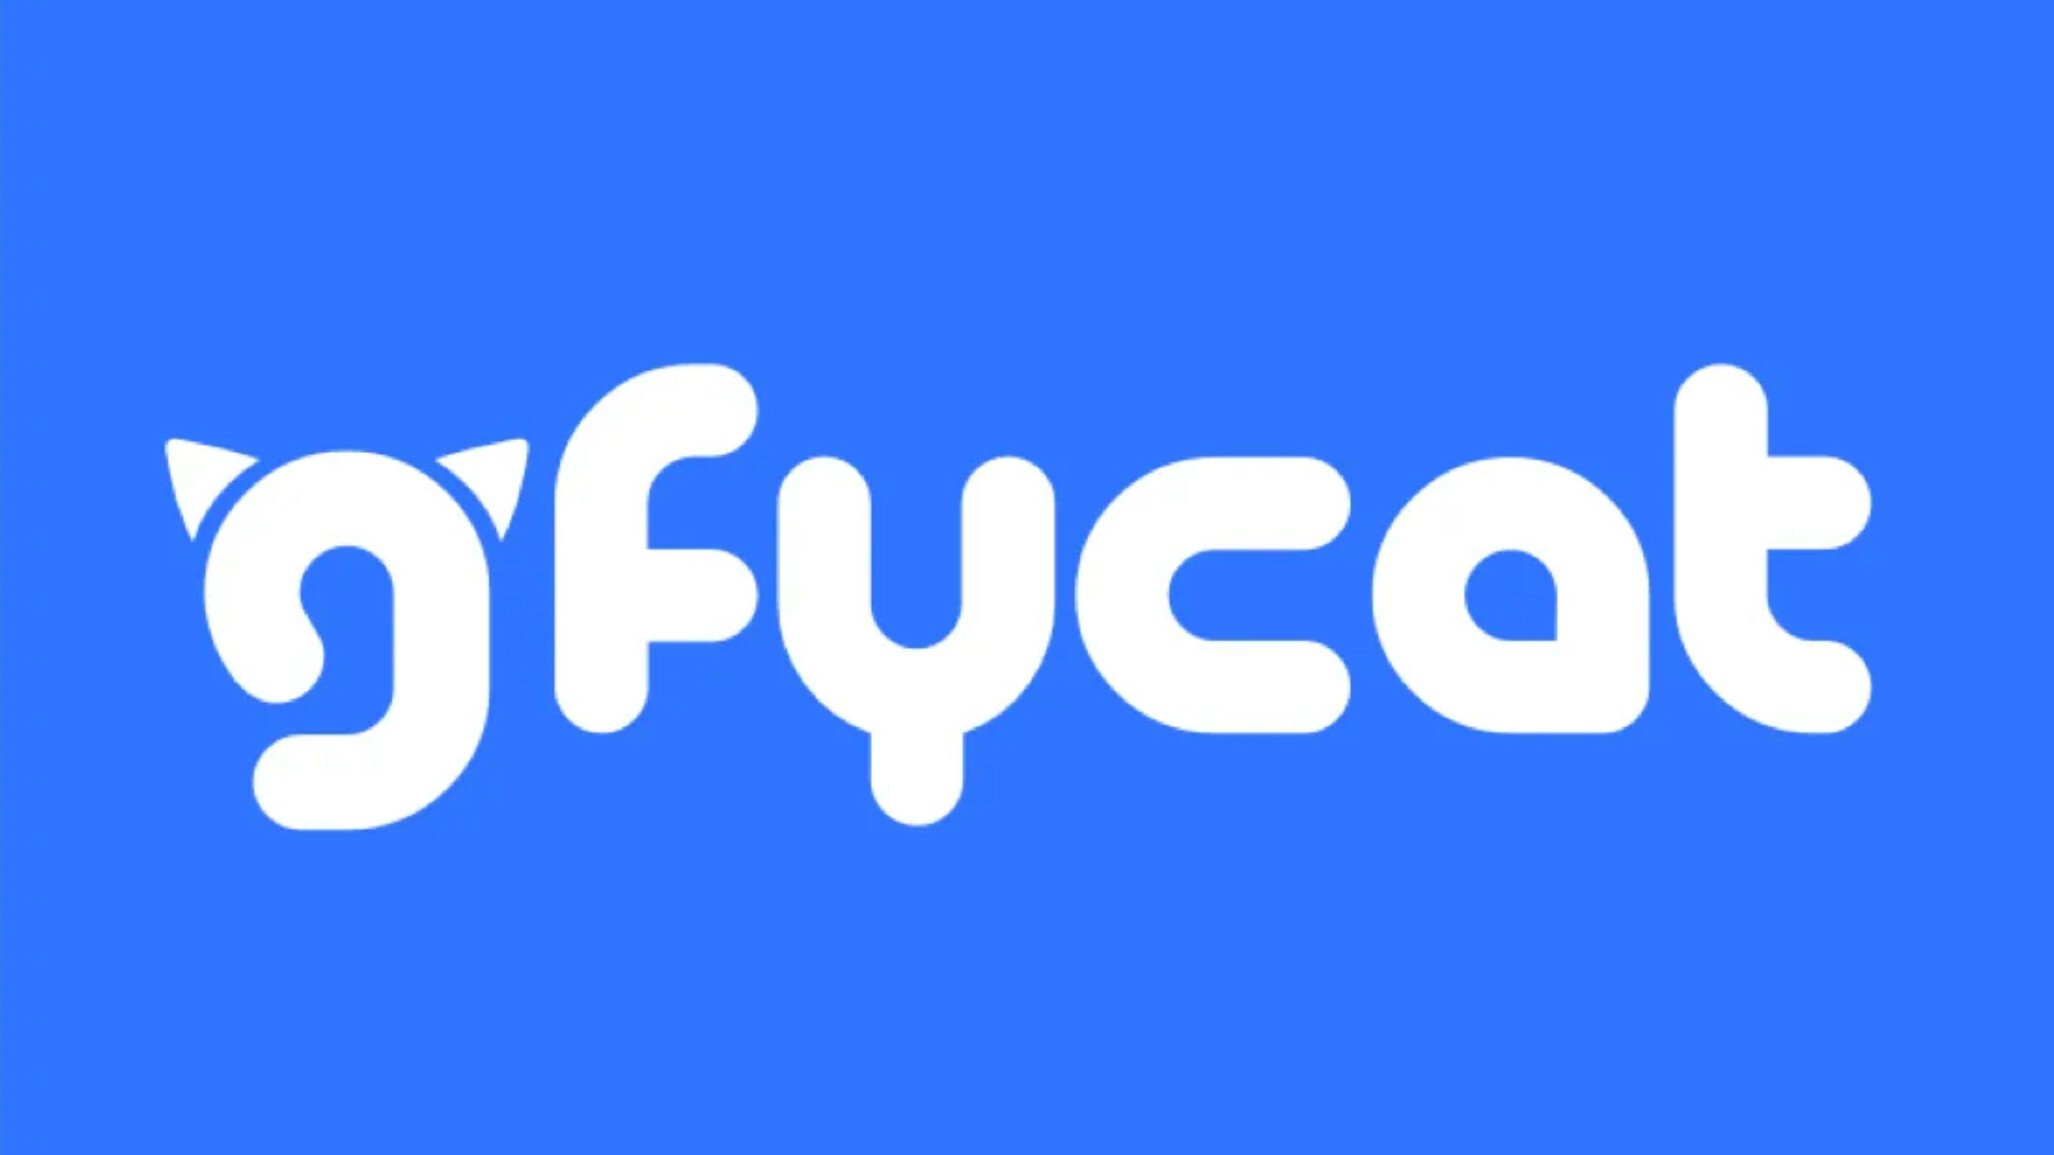 The Gfycat logo.